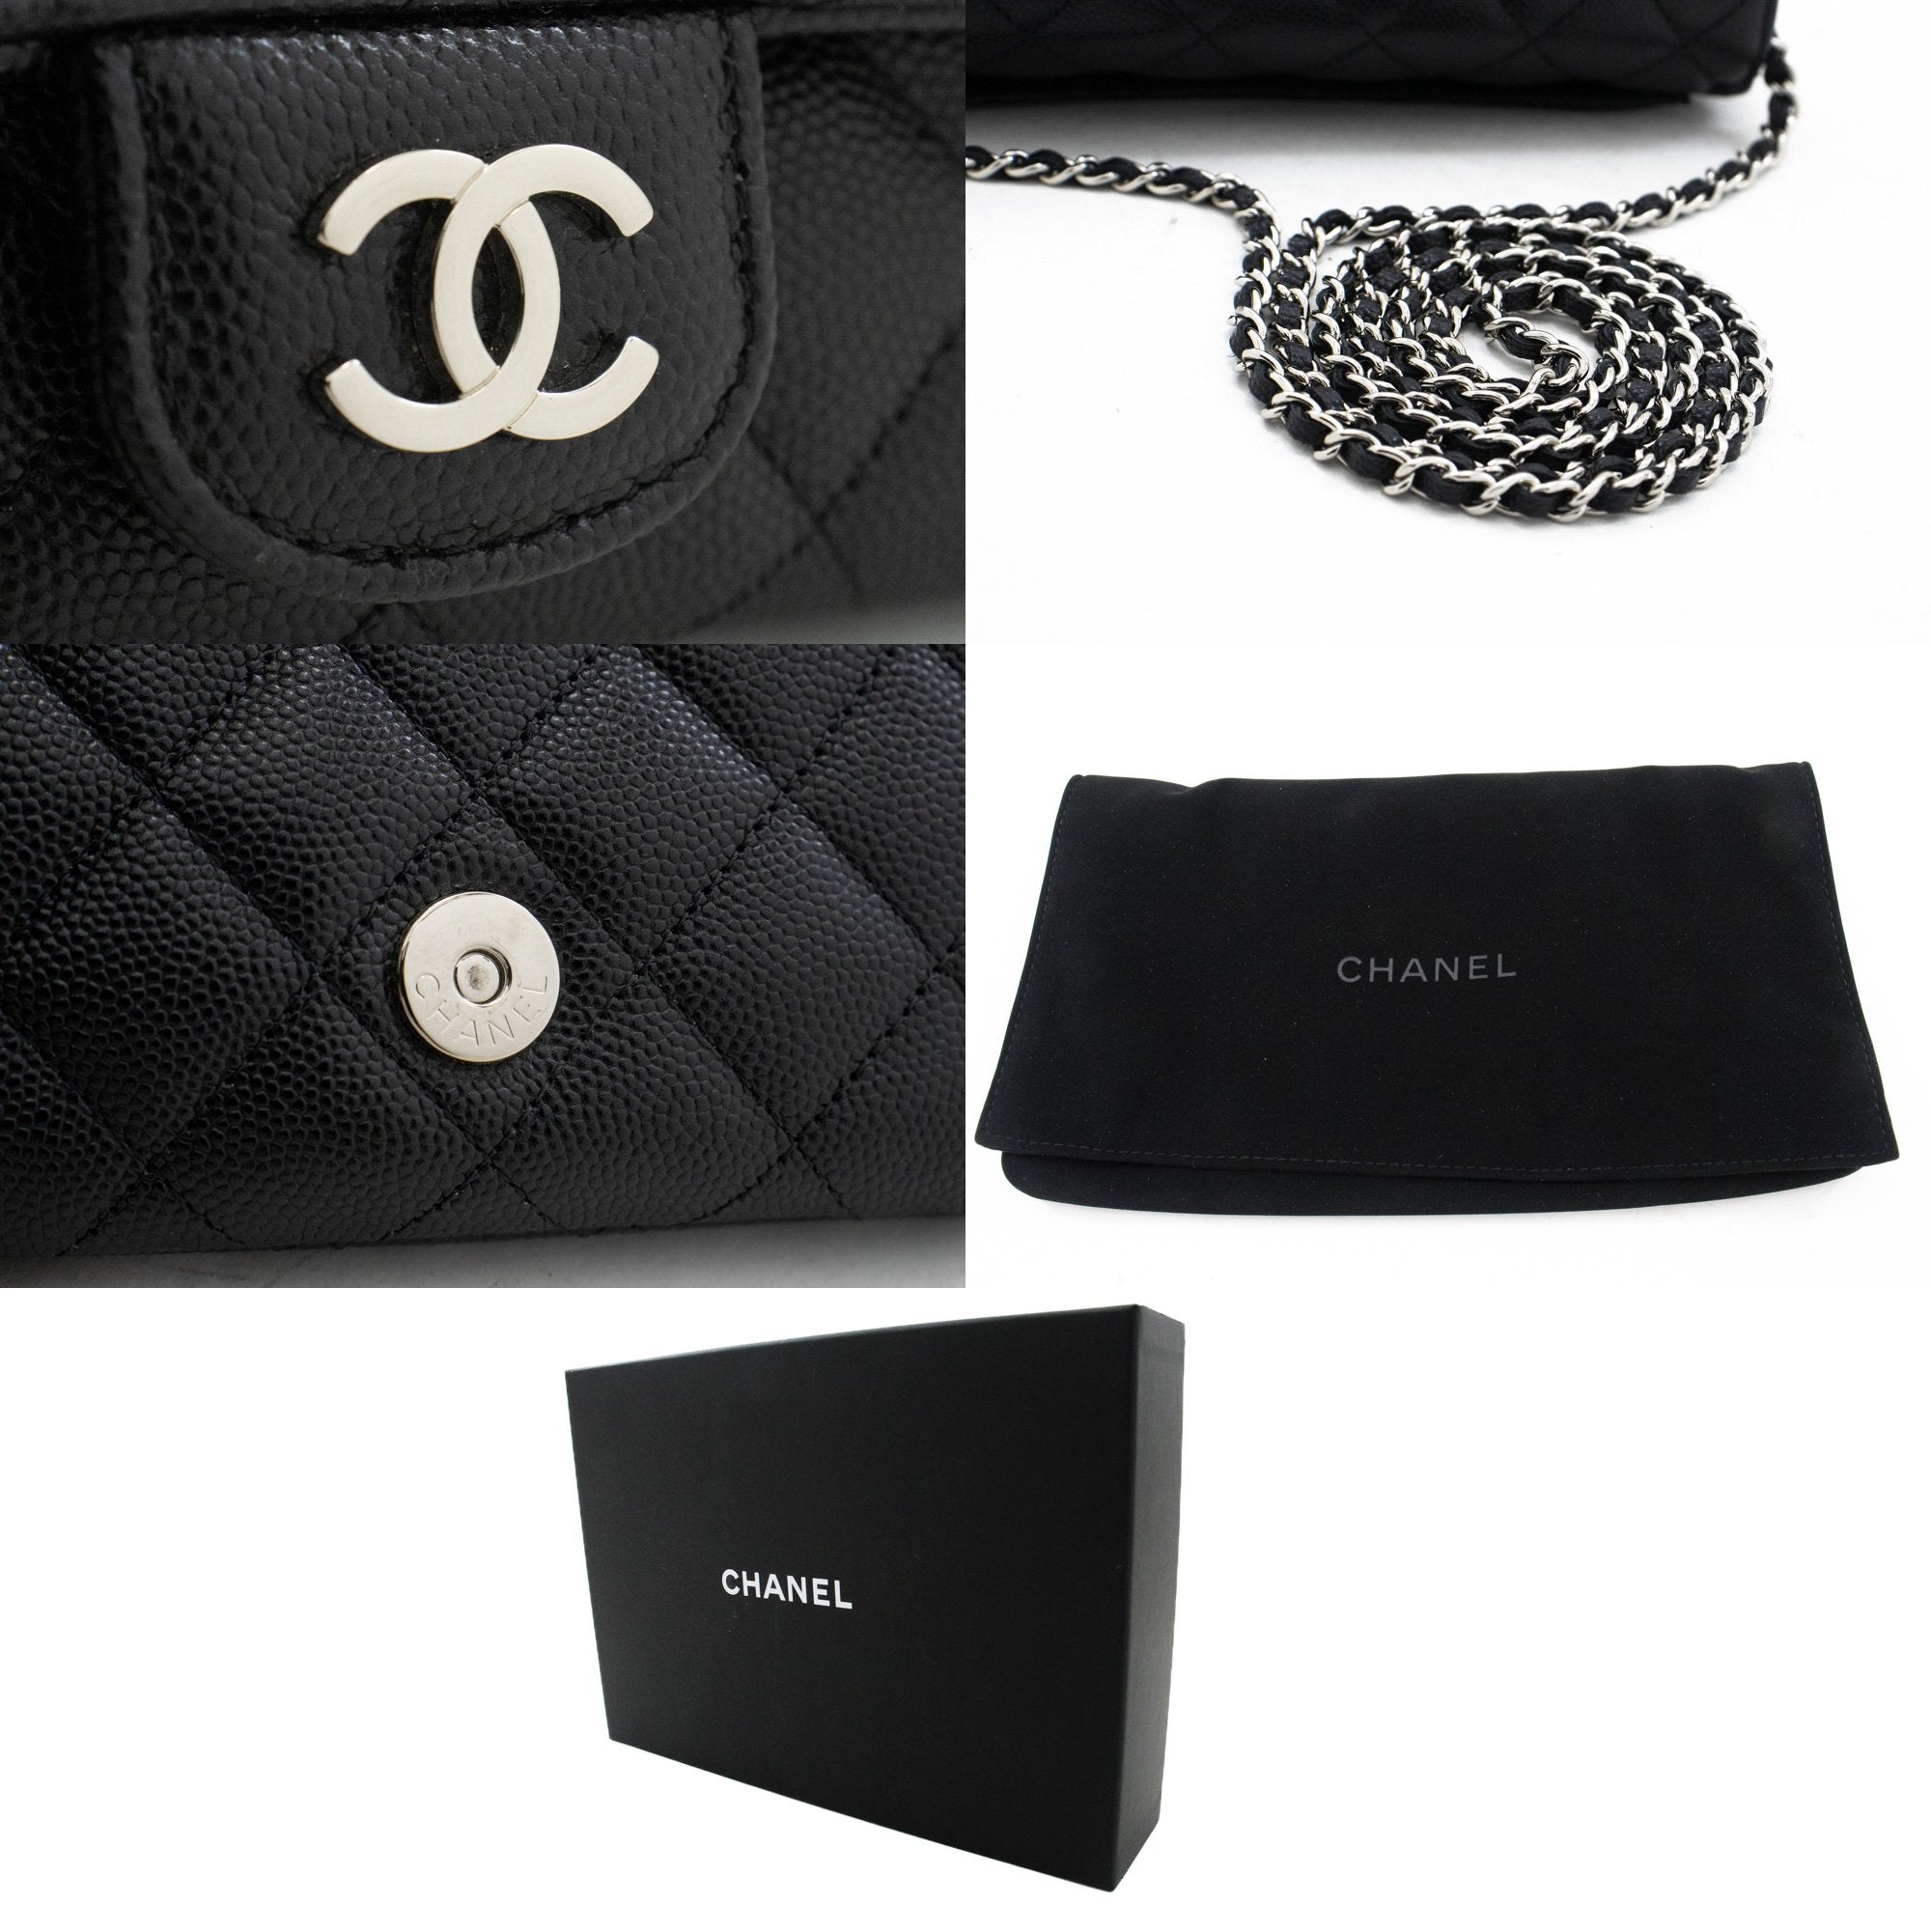 Chanel Flap Phone Holder with Chain Bag Black Crossbody Clutch J99